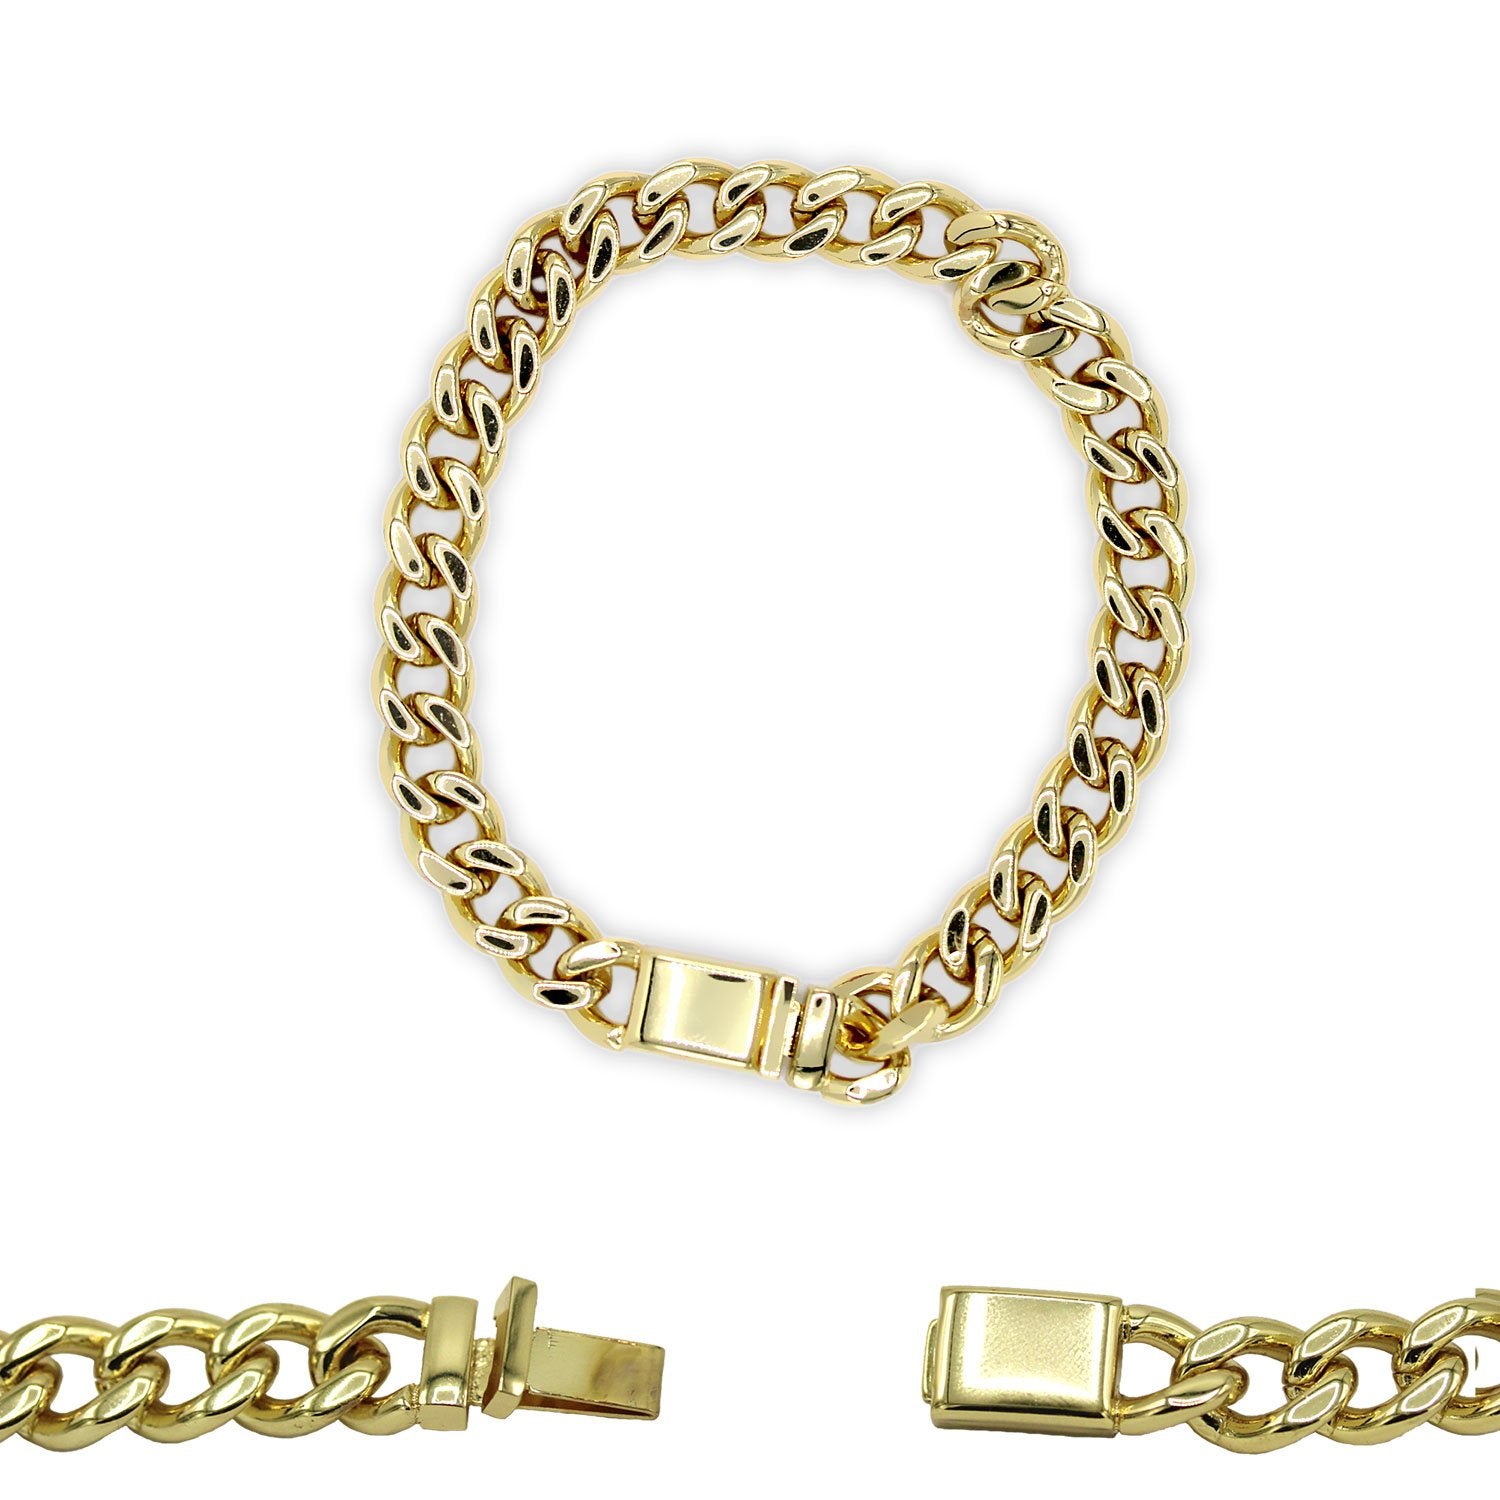 Gold Cuban Chain Bracelet – RoseGold & Black Pty Ltd